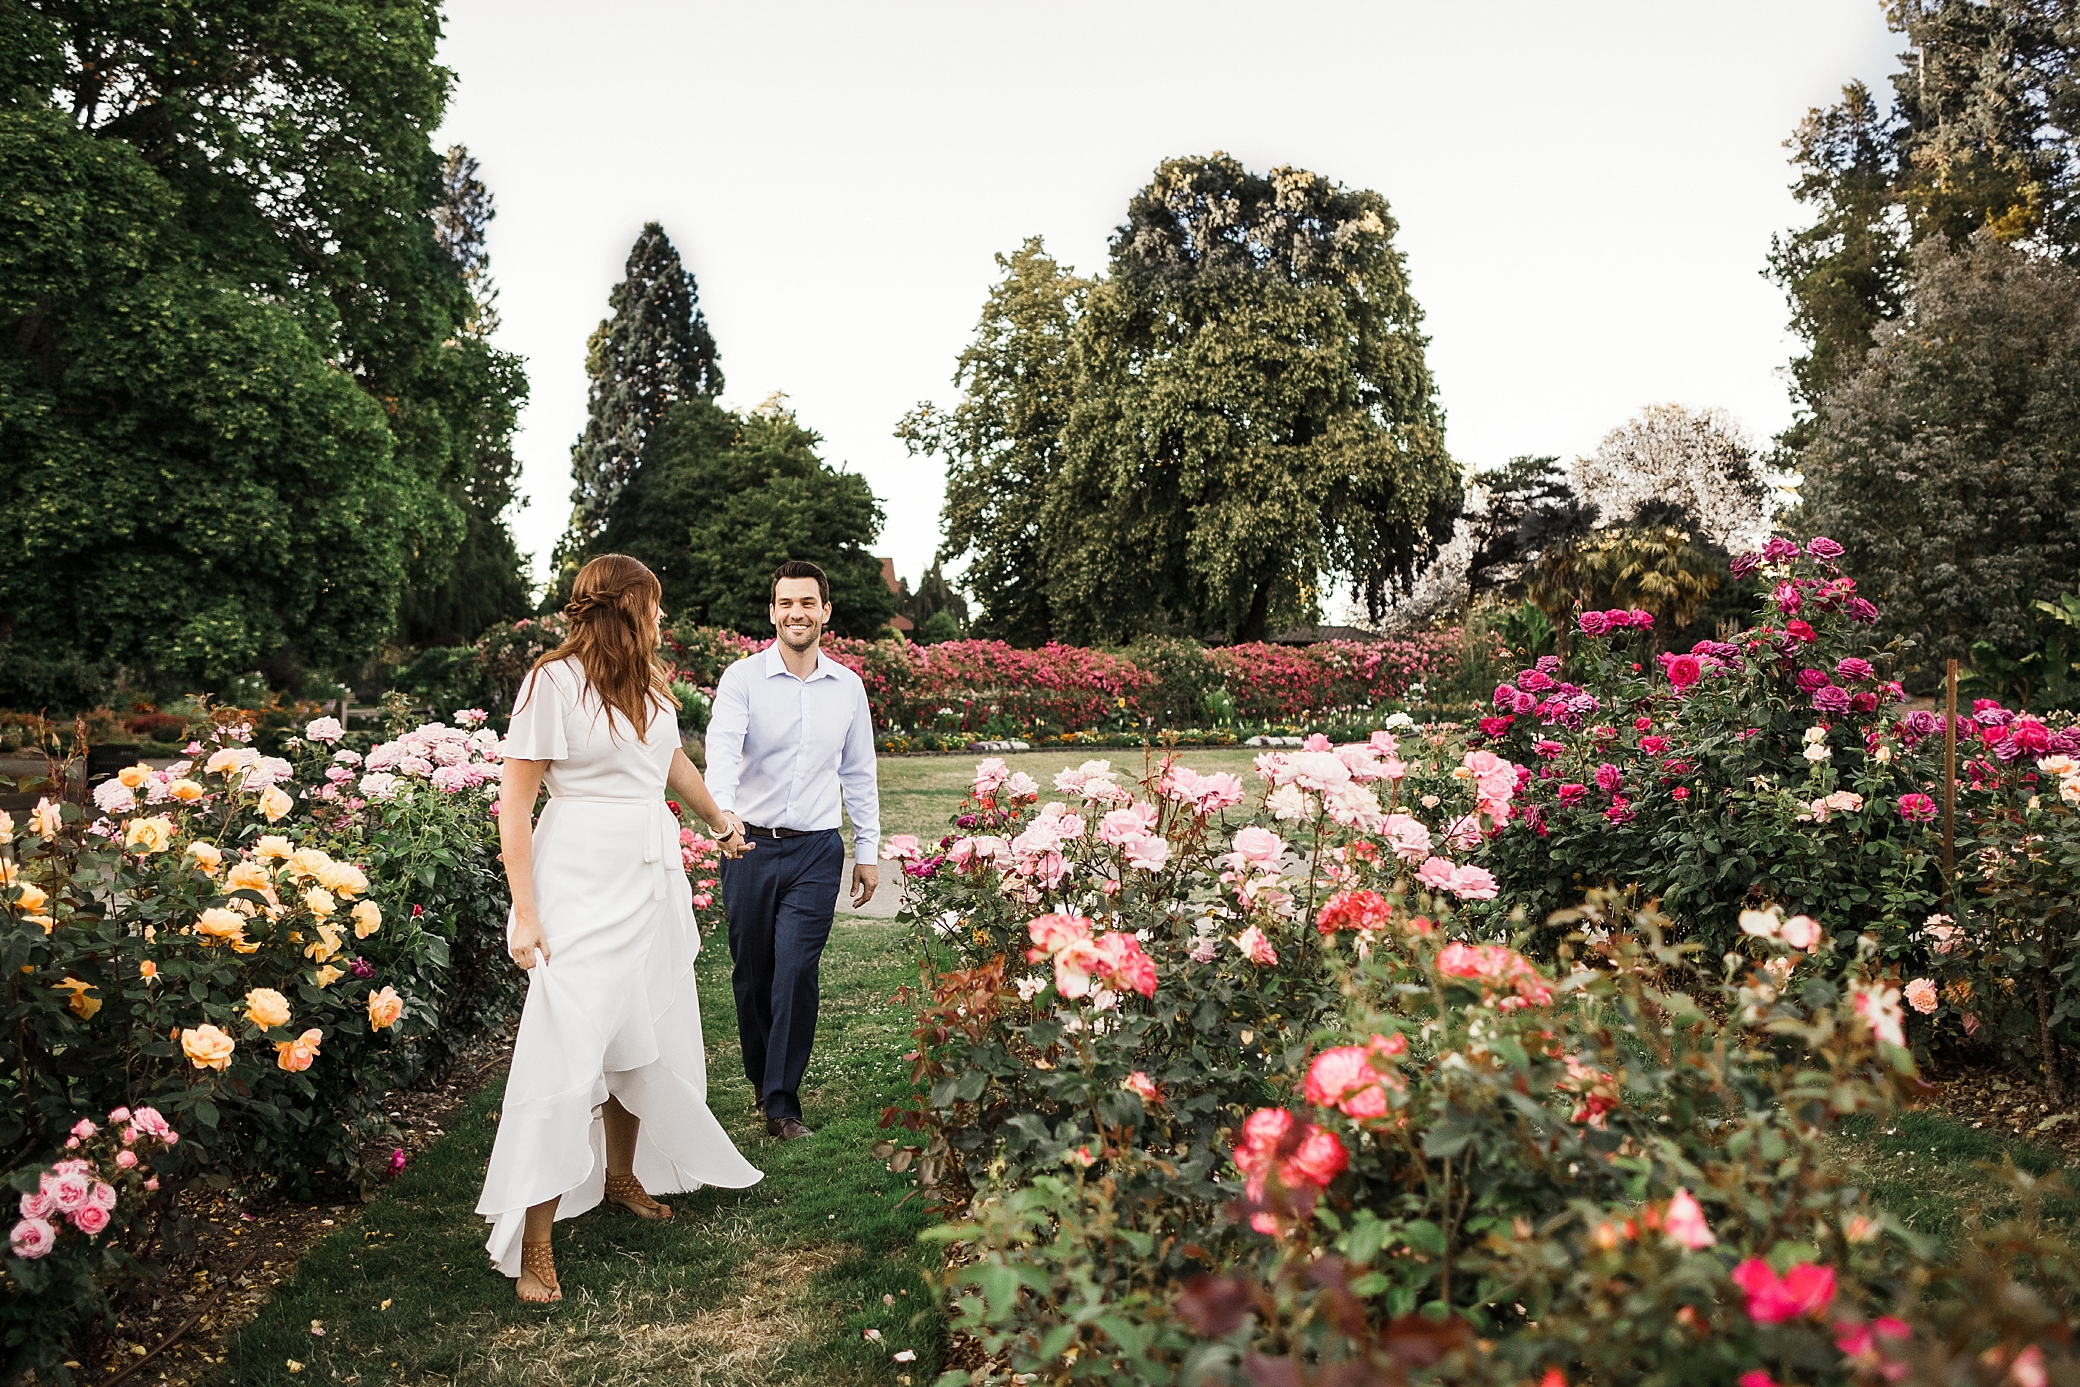 Rose Garden Engagement Photos at Point Defiance Park | Tacoma Wedding Photographer, Megan Montalvo Photography